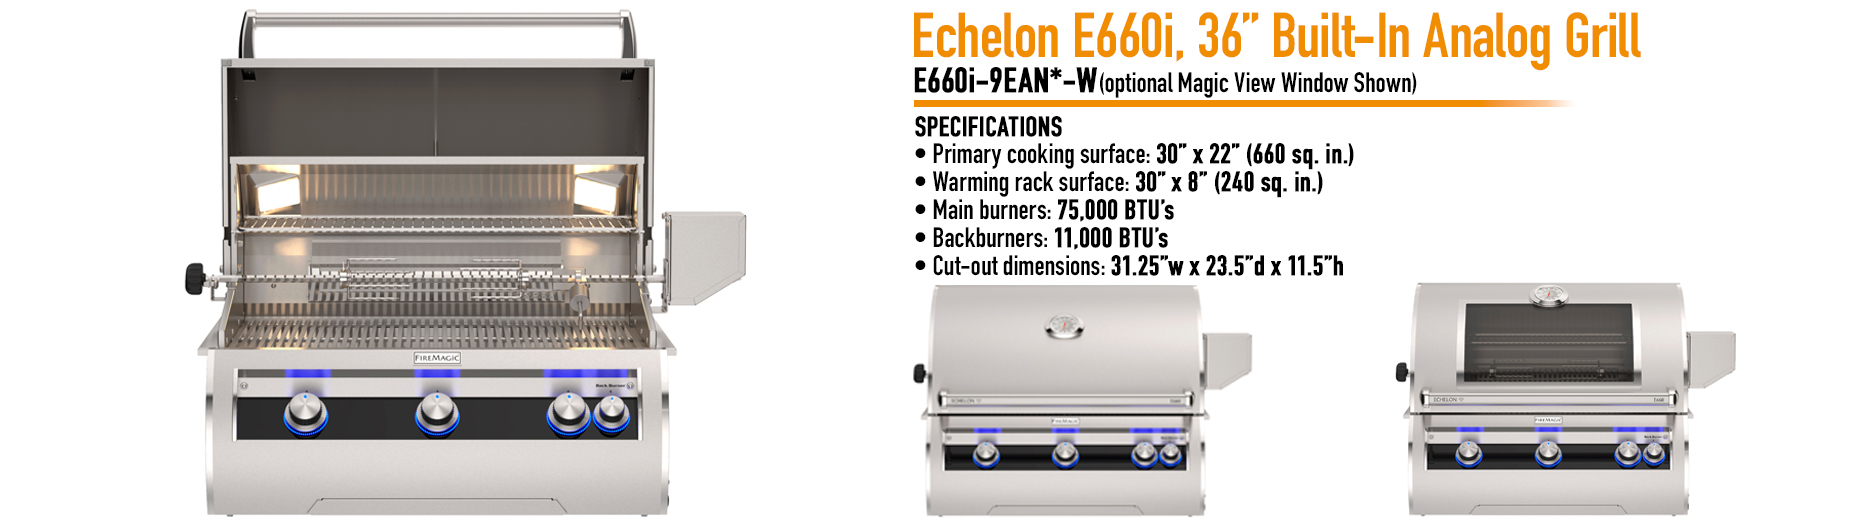 Fire Magic Analog Echelon Diamond Series E660 Built-In Grill with Rotisserie